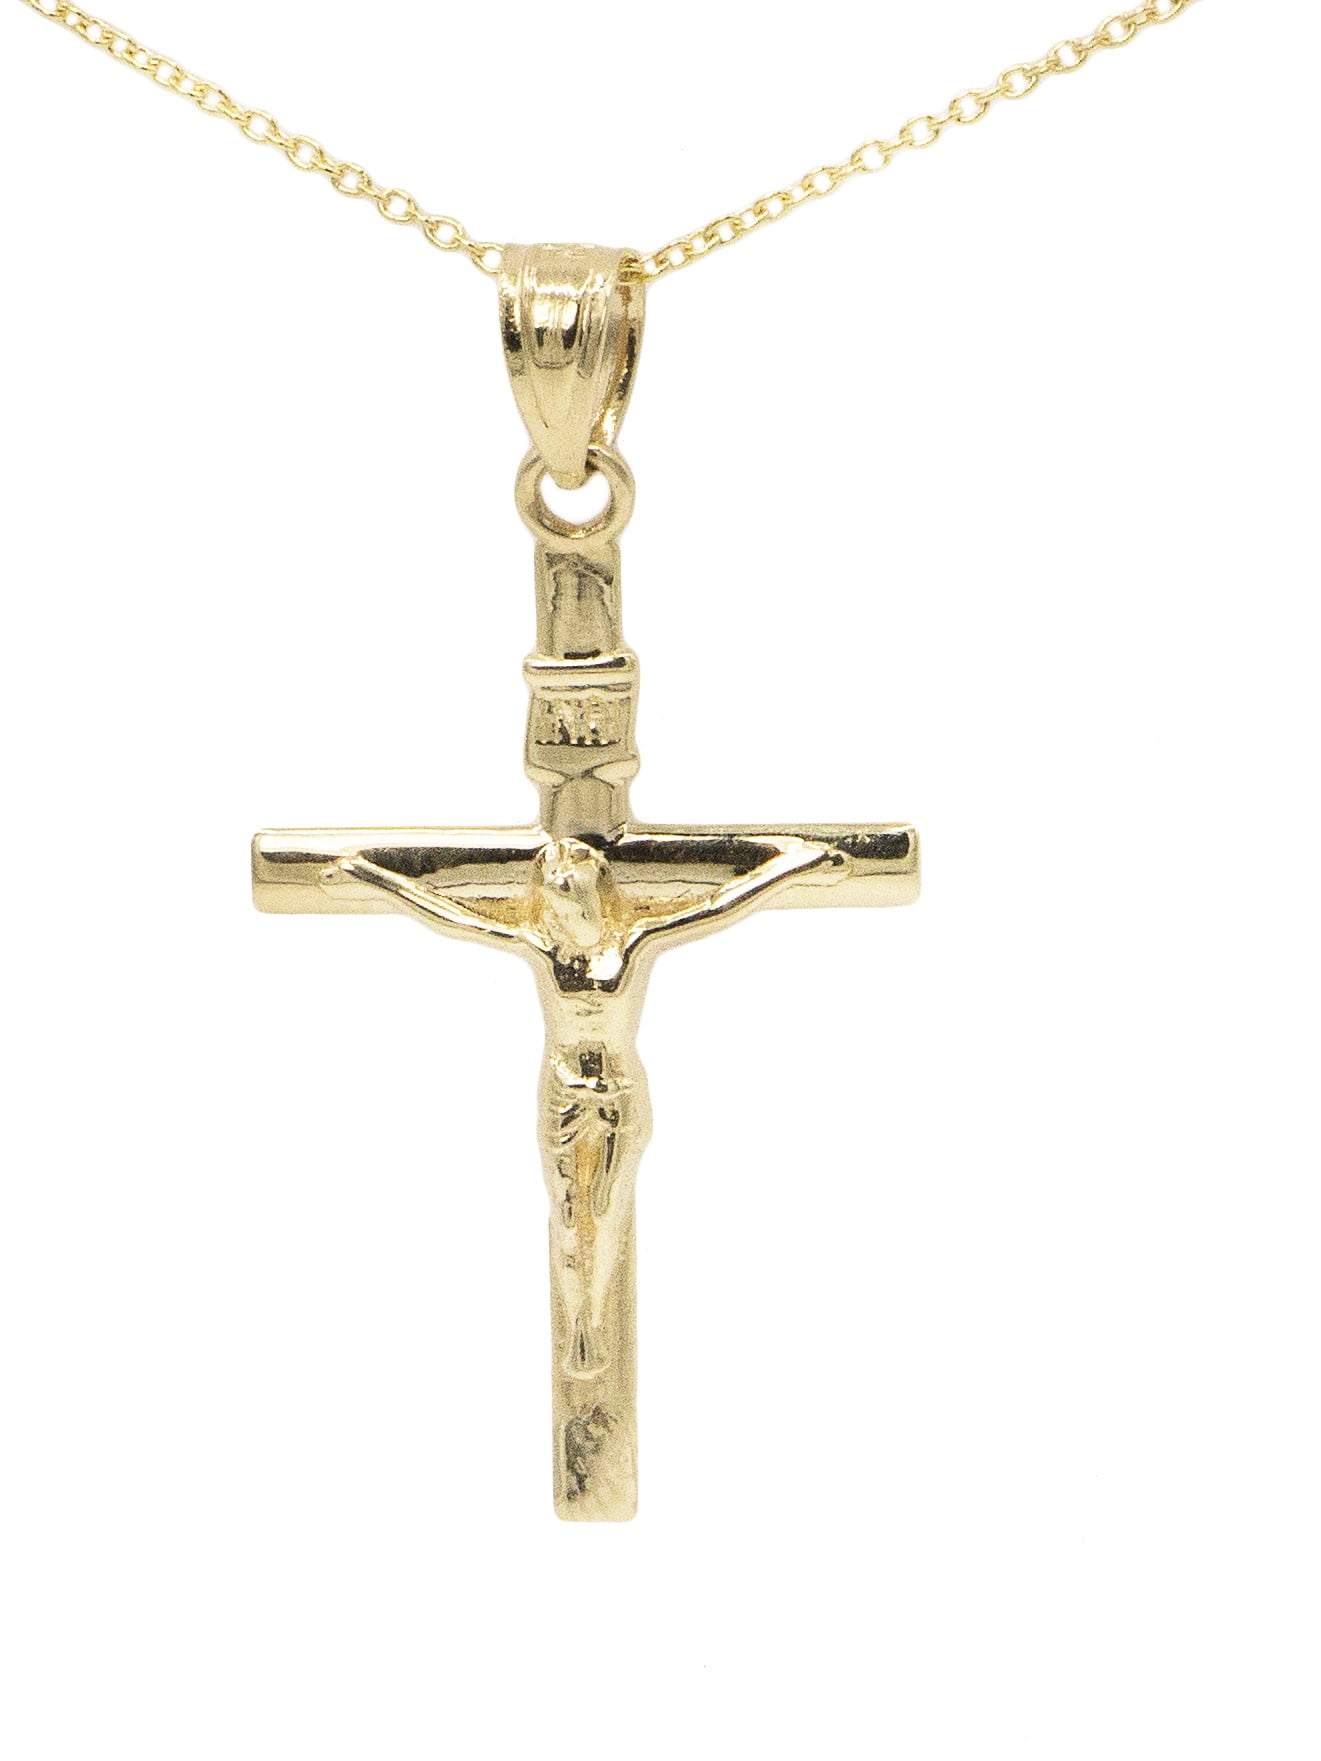 Infinity Cross Multi-strand Necklace Chain Crucifix Pendant 